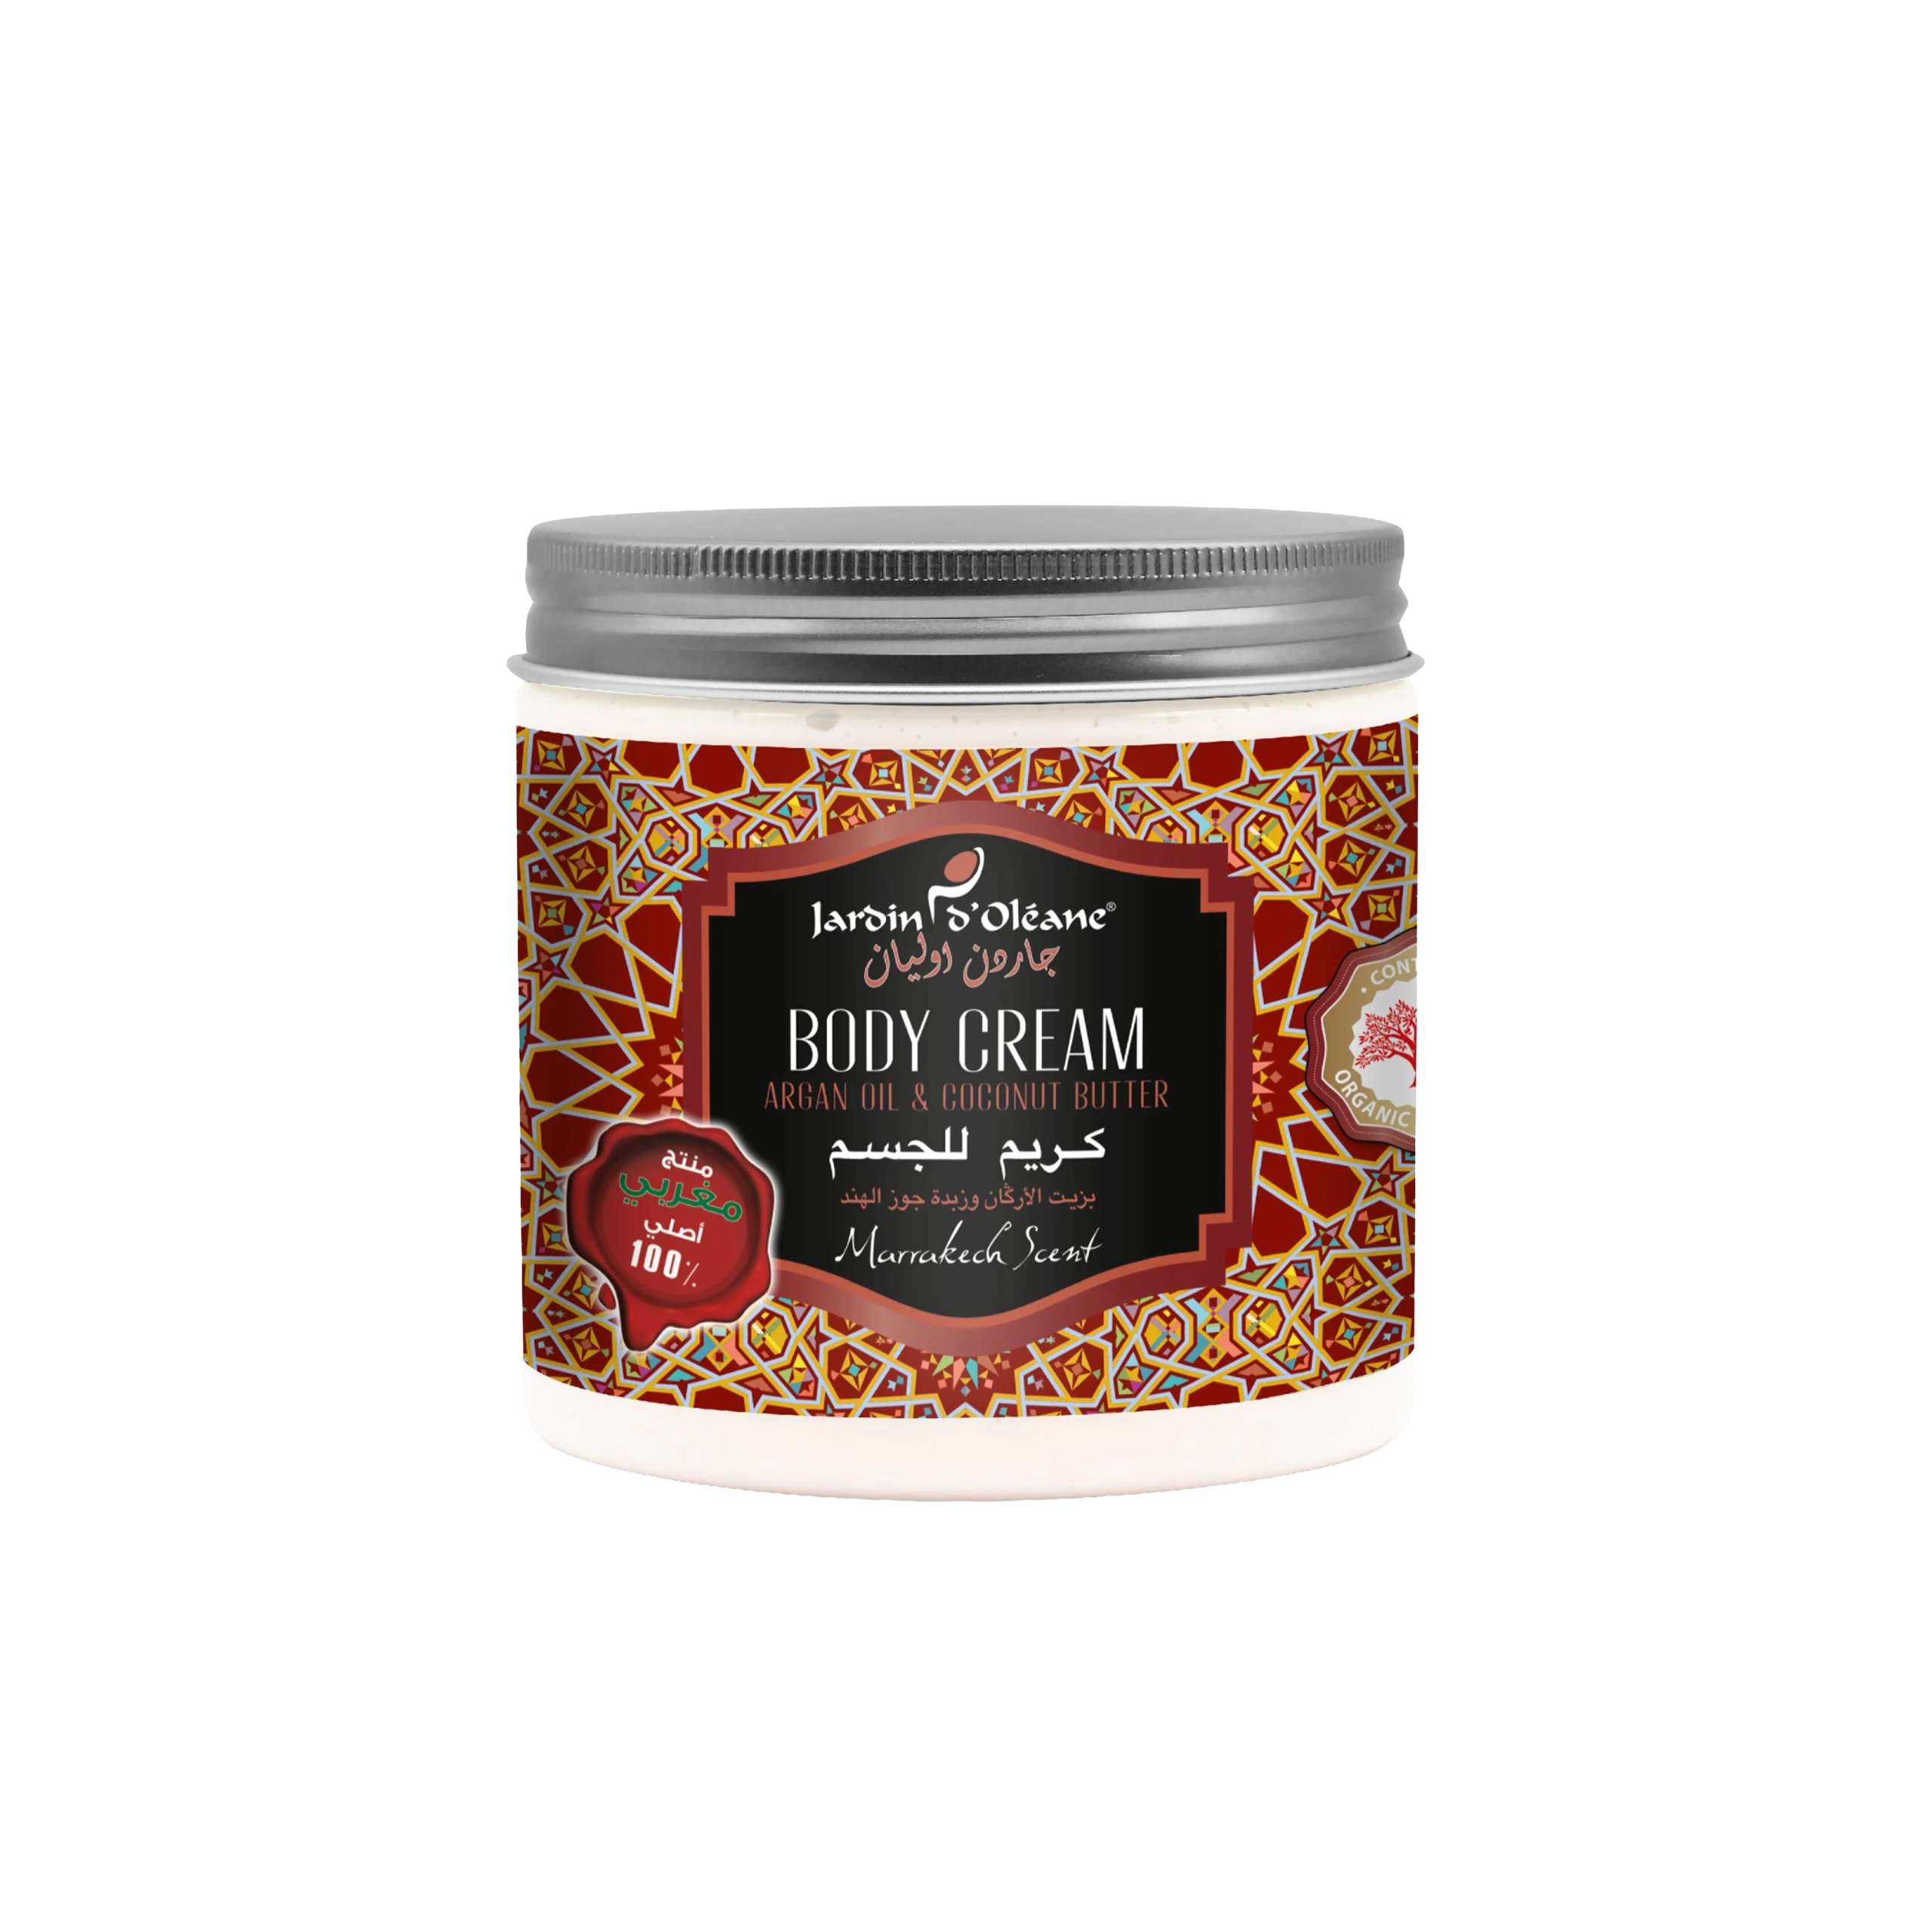 125-Jardin D’Oleane Body Cream with Argan Oil & Coconut Butter – Marrakech Scent 500ml